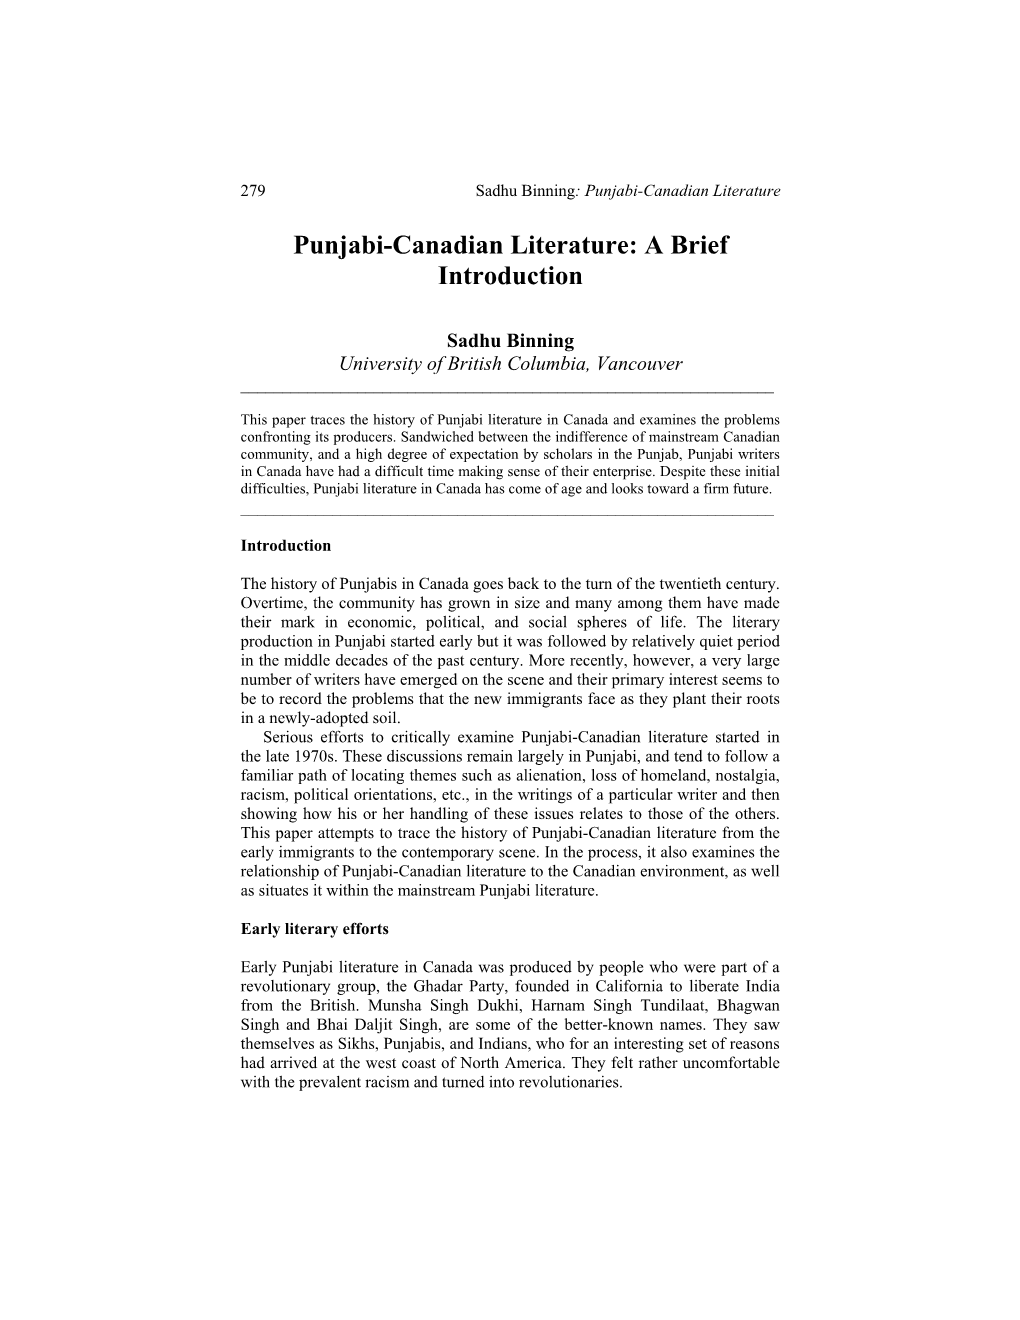 Punjabi-Canadian Literature: a Brief Introduction